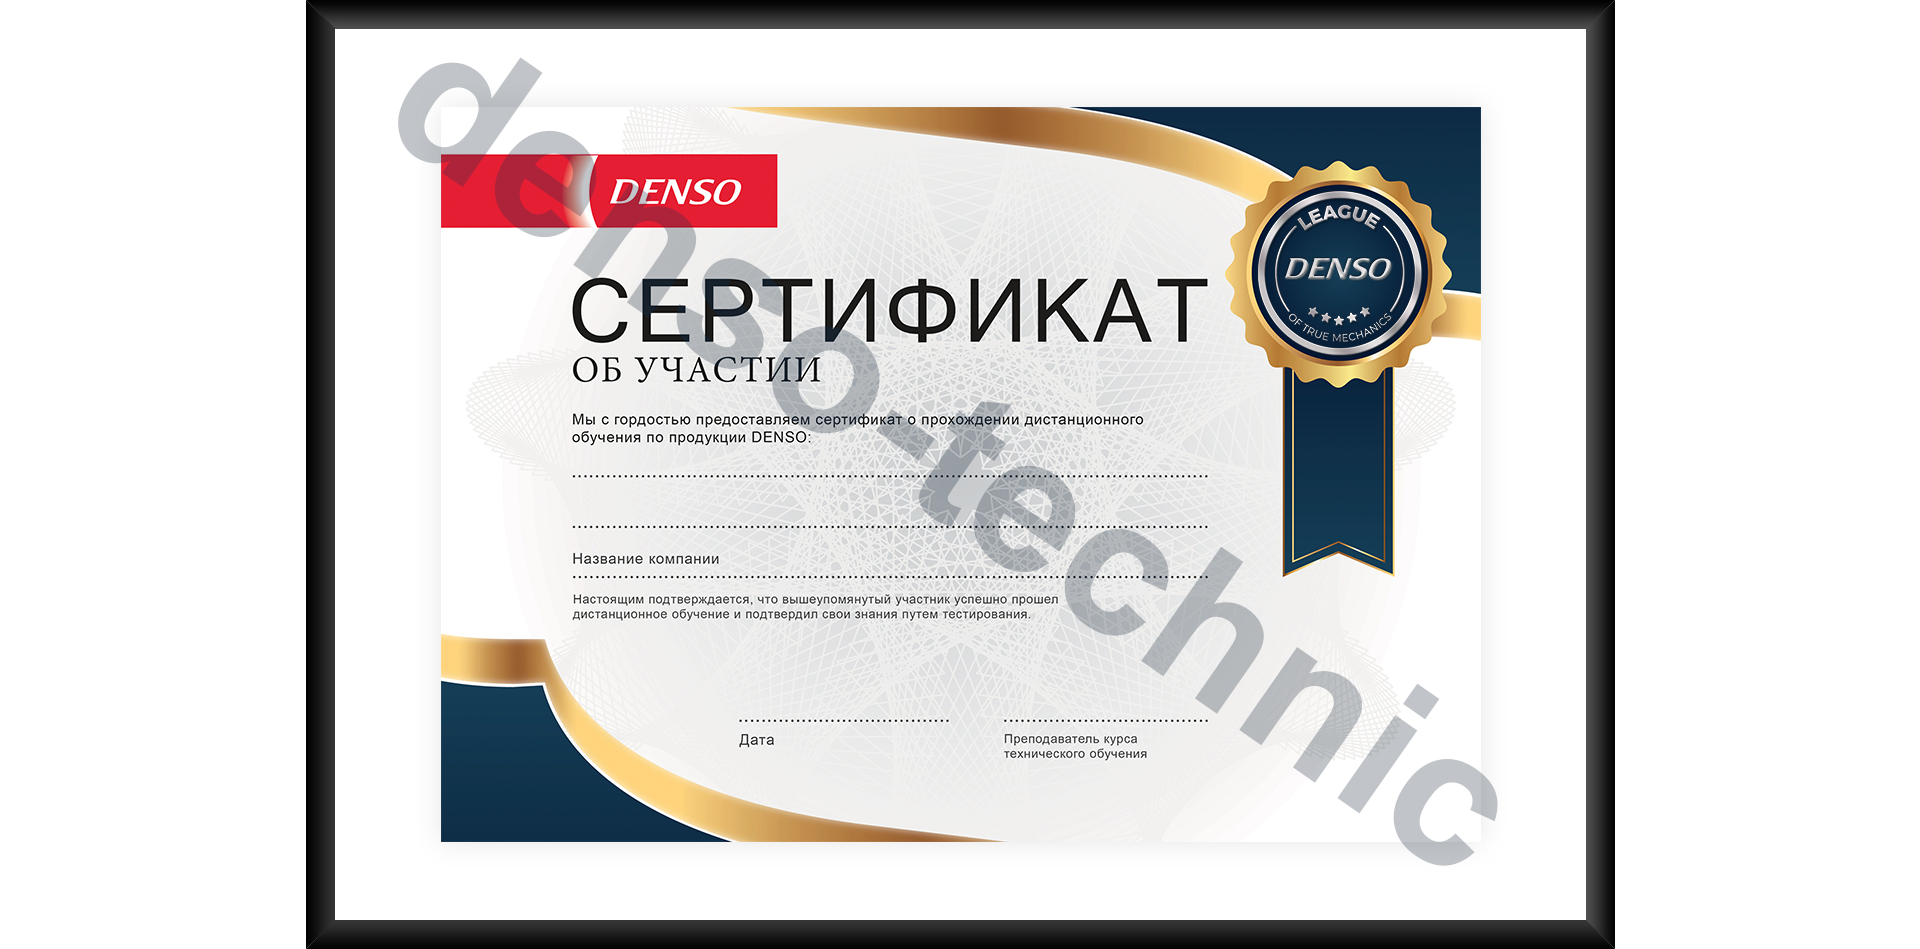 DENSO - Сертификат